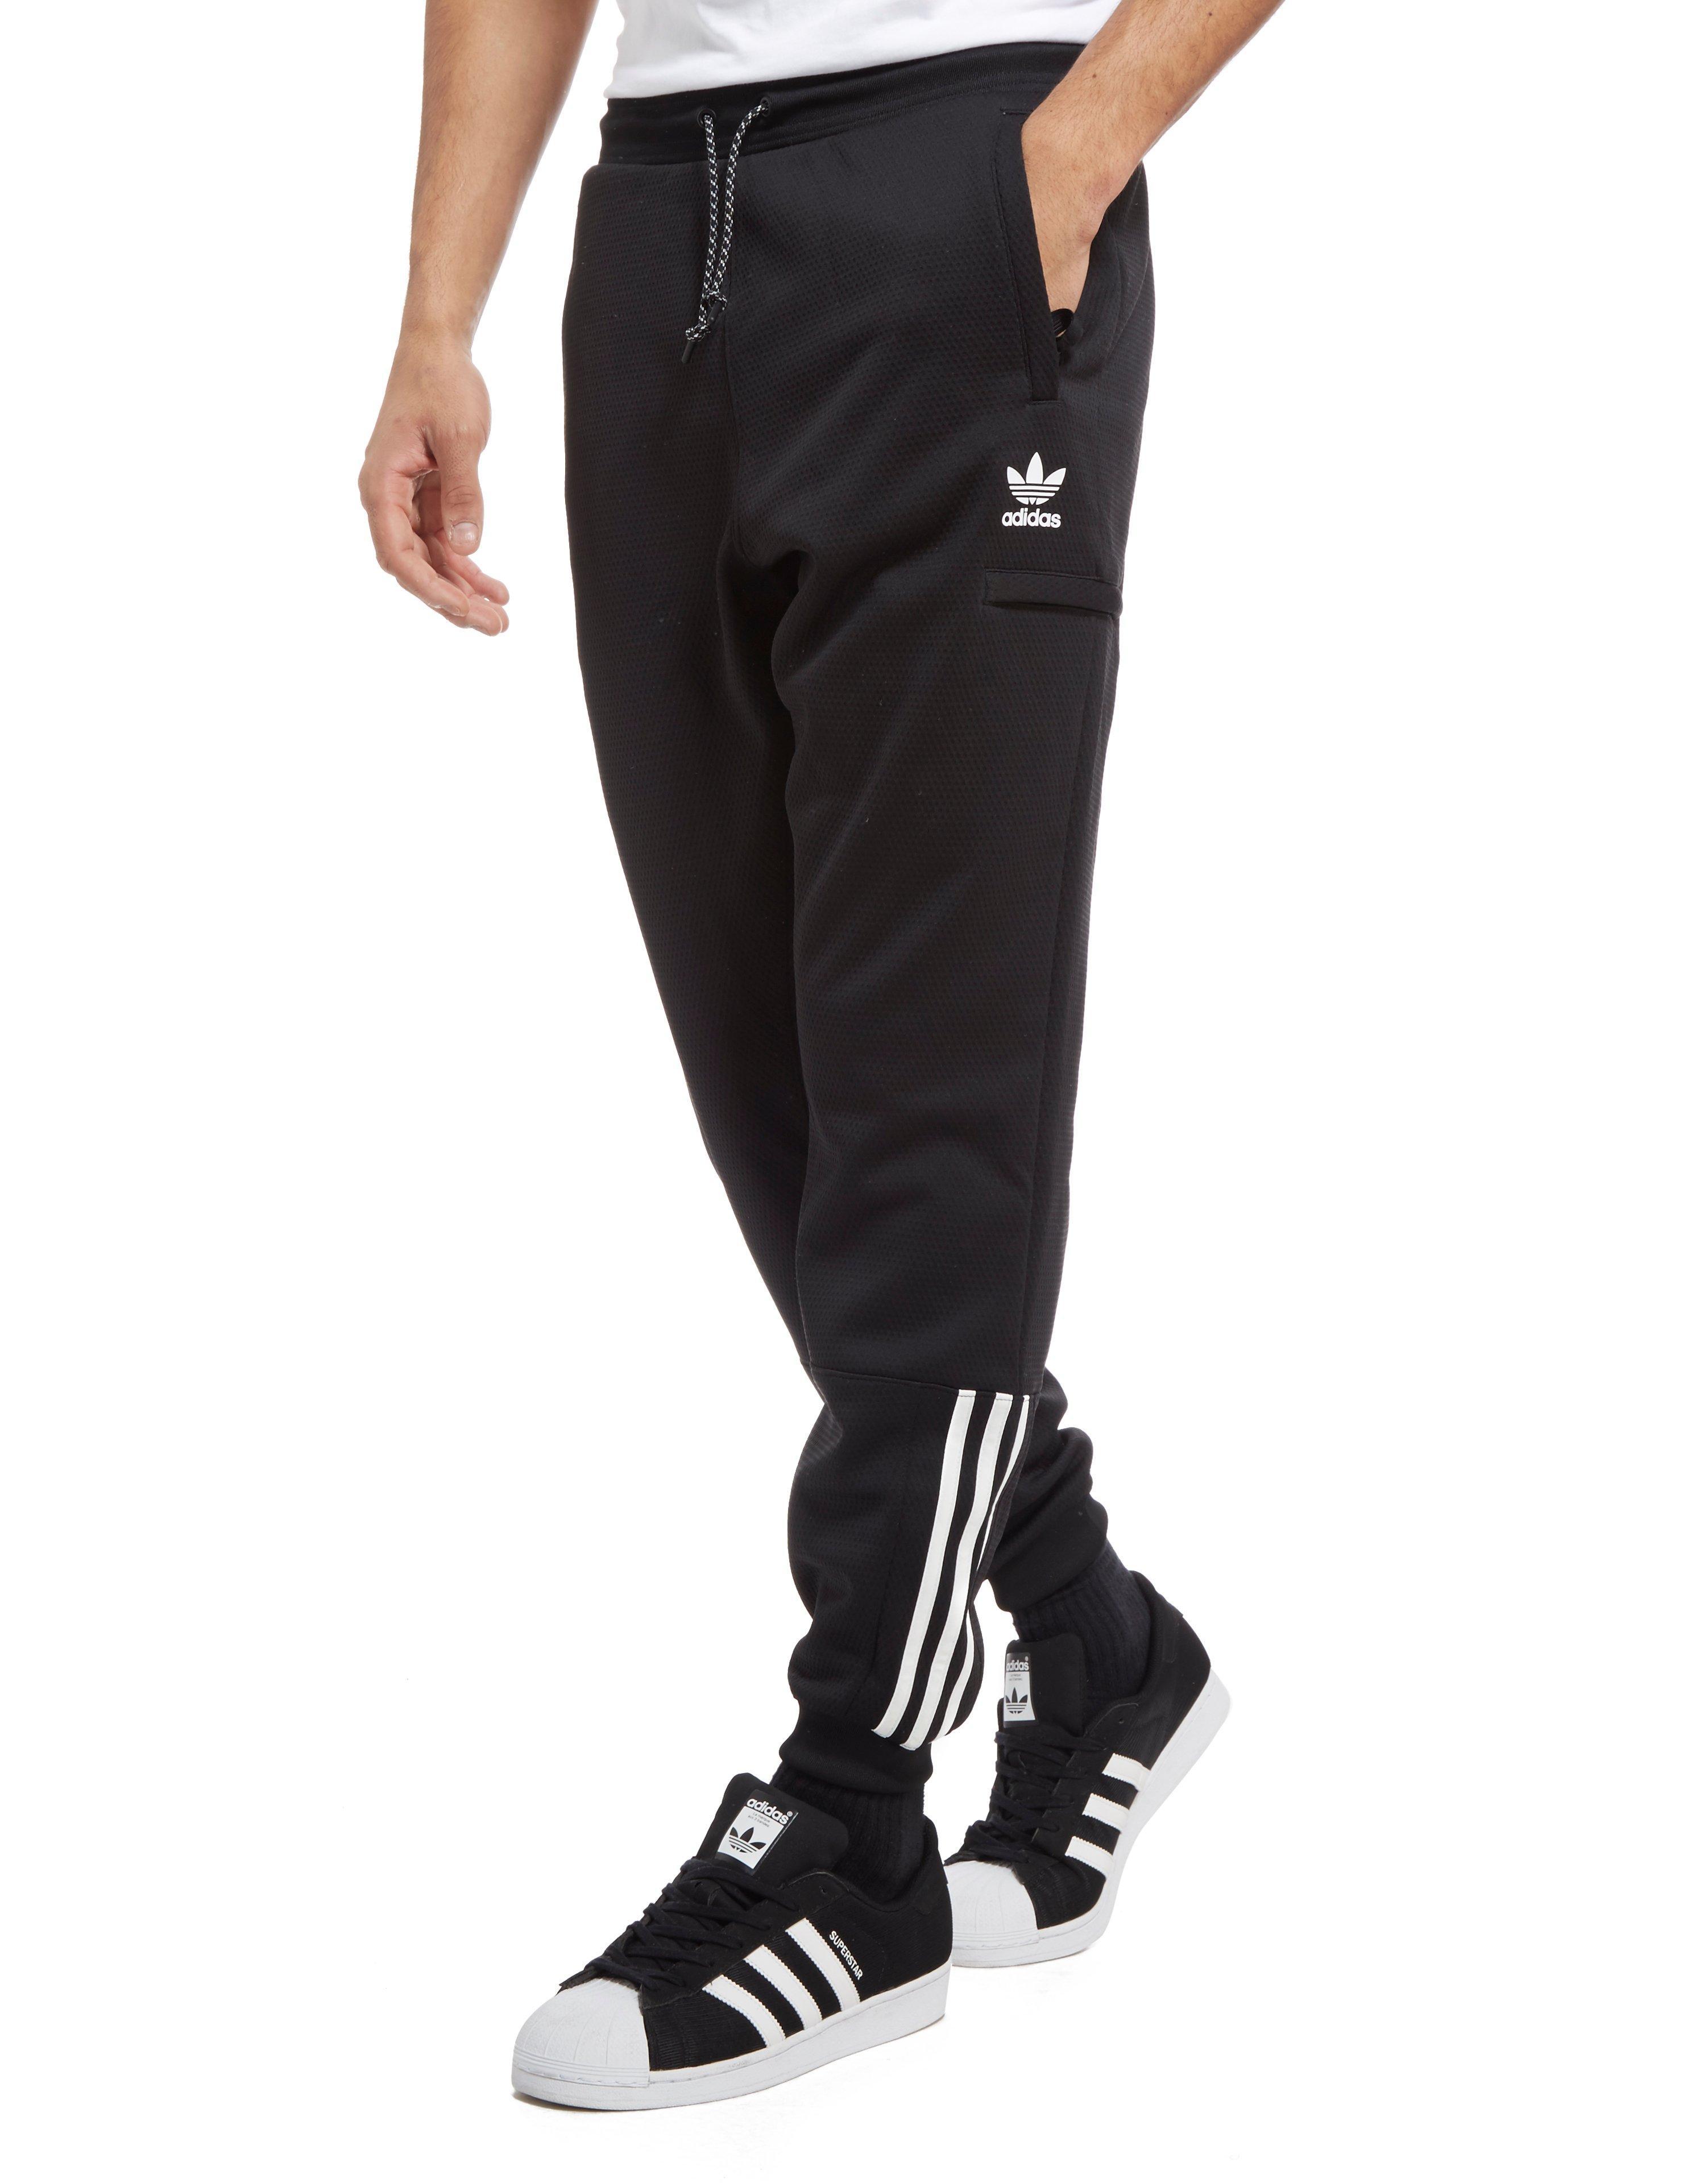 adidas Originals Synthetic Nova Polyester Pants in Black for Men - Lyst